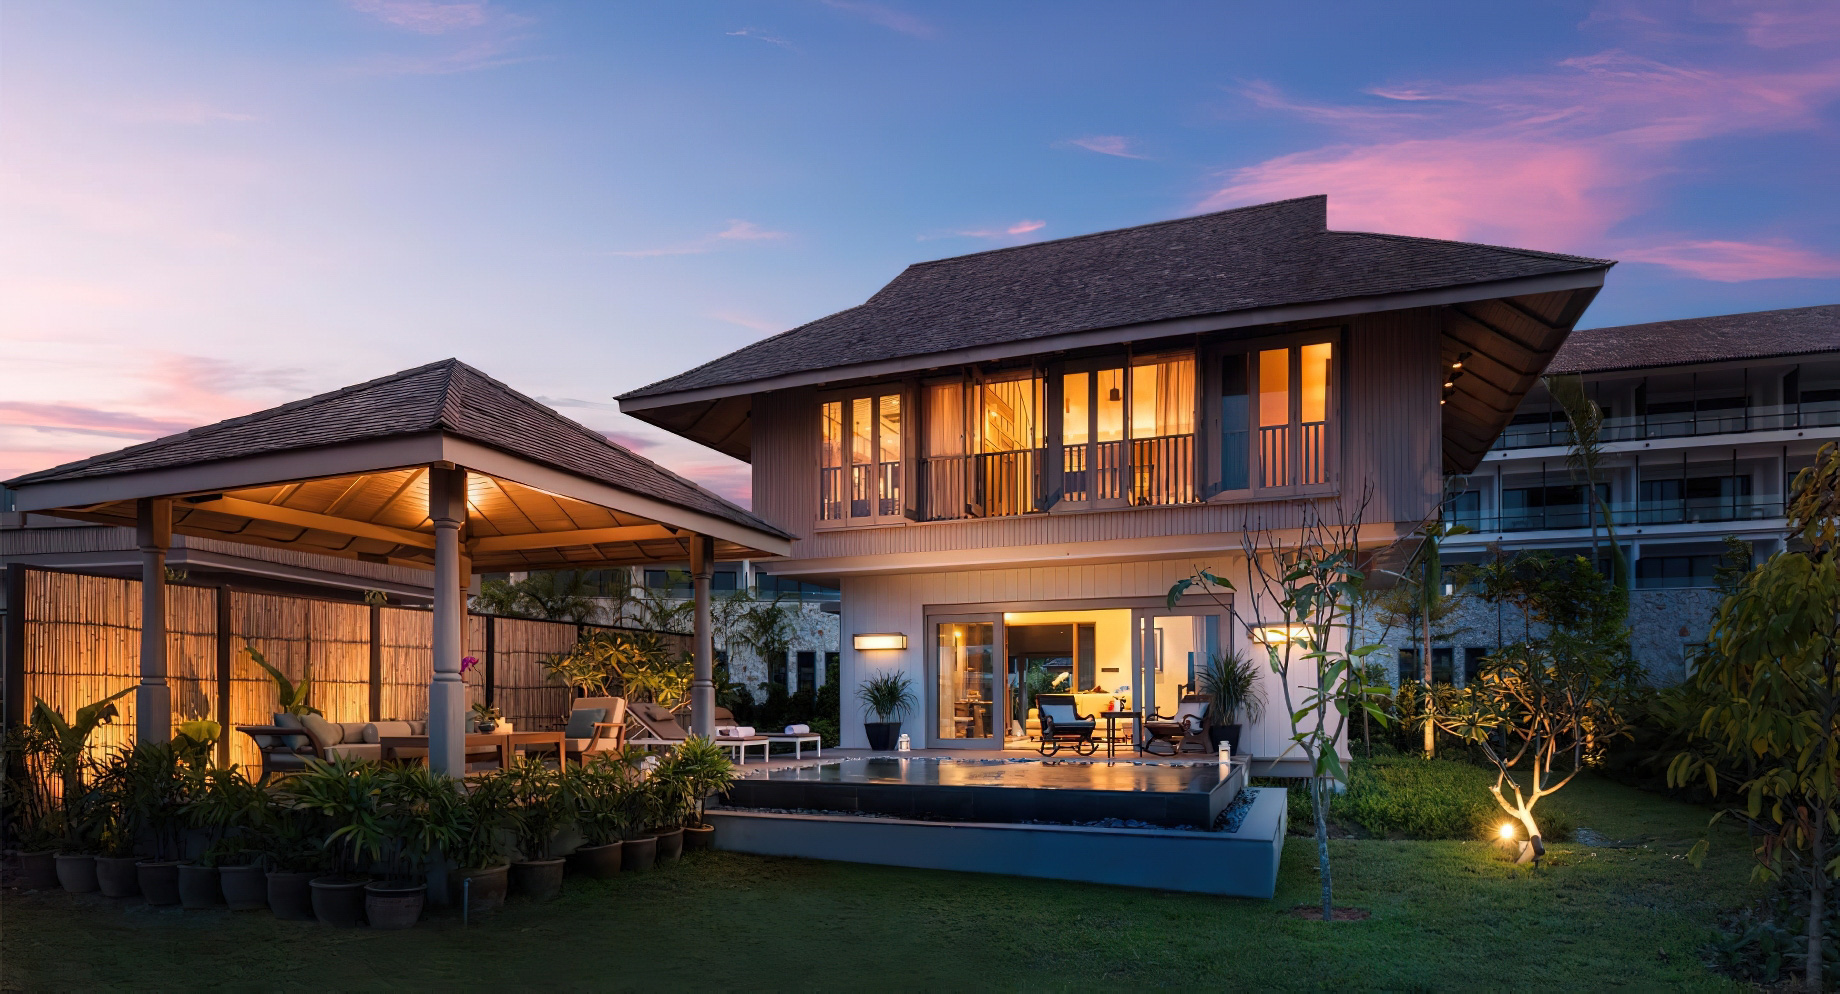 Anantara Desaru Coast Resort & Villas – Johor, Malaysia – Lagoon Pool Villa Exterior Sunset